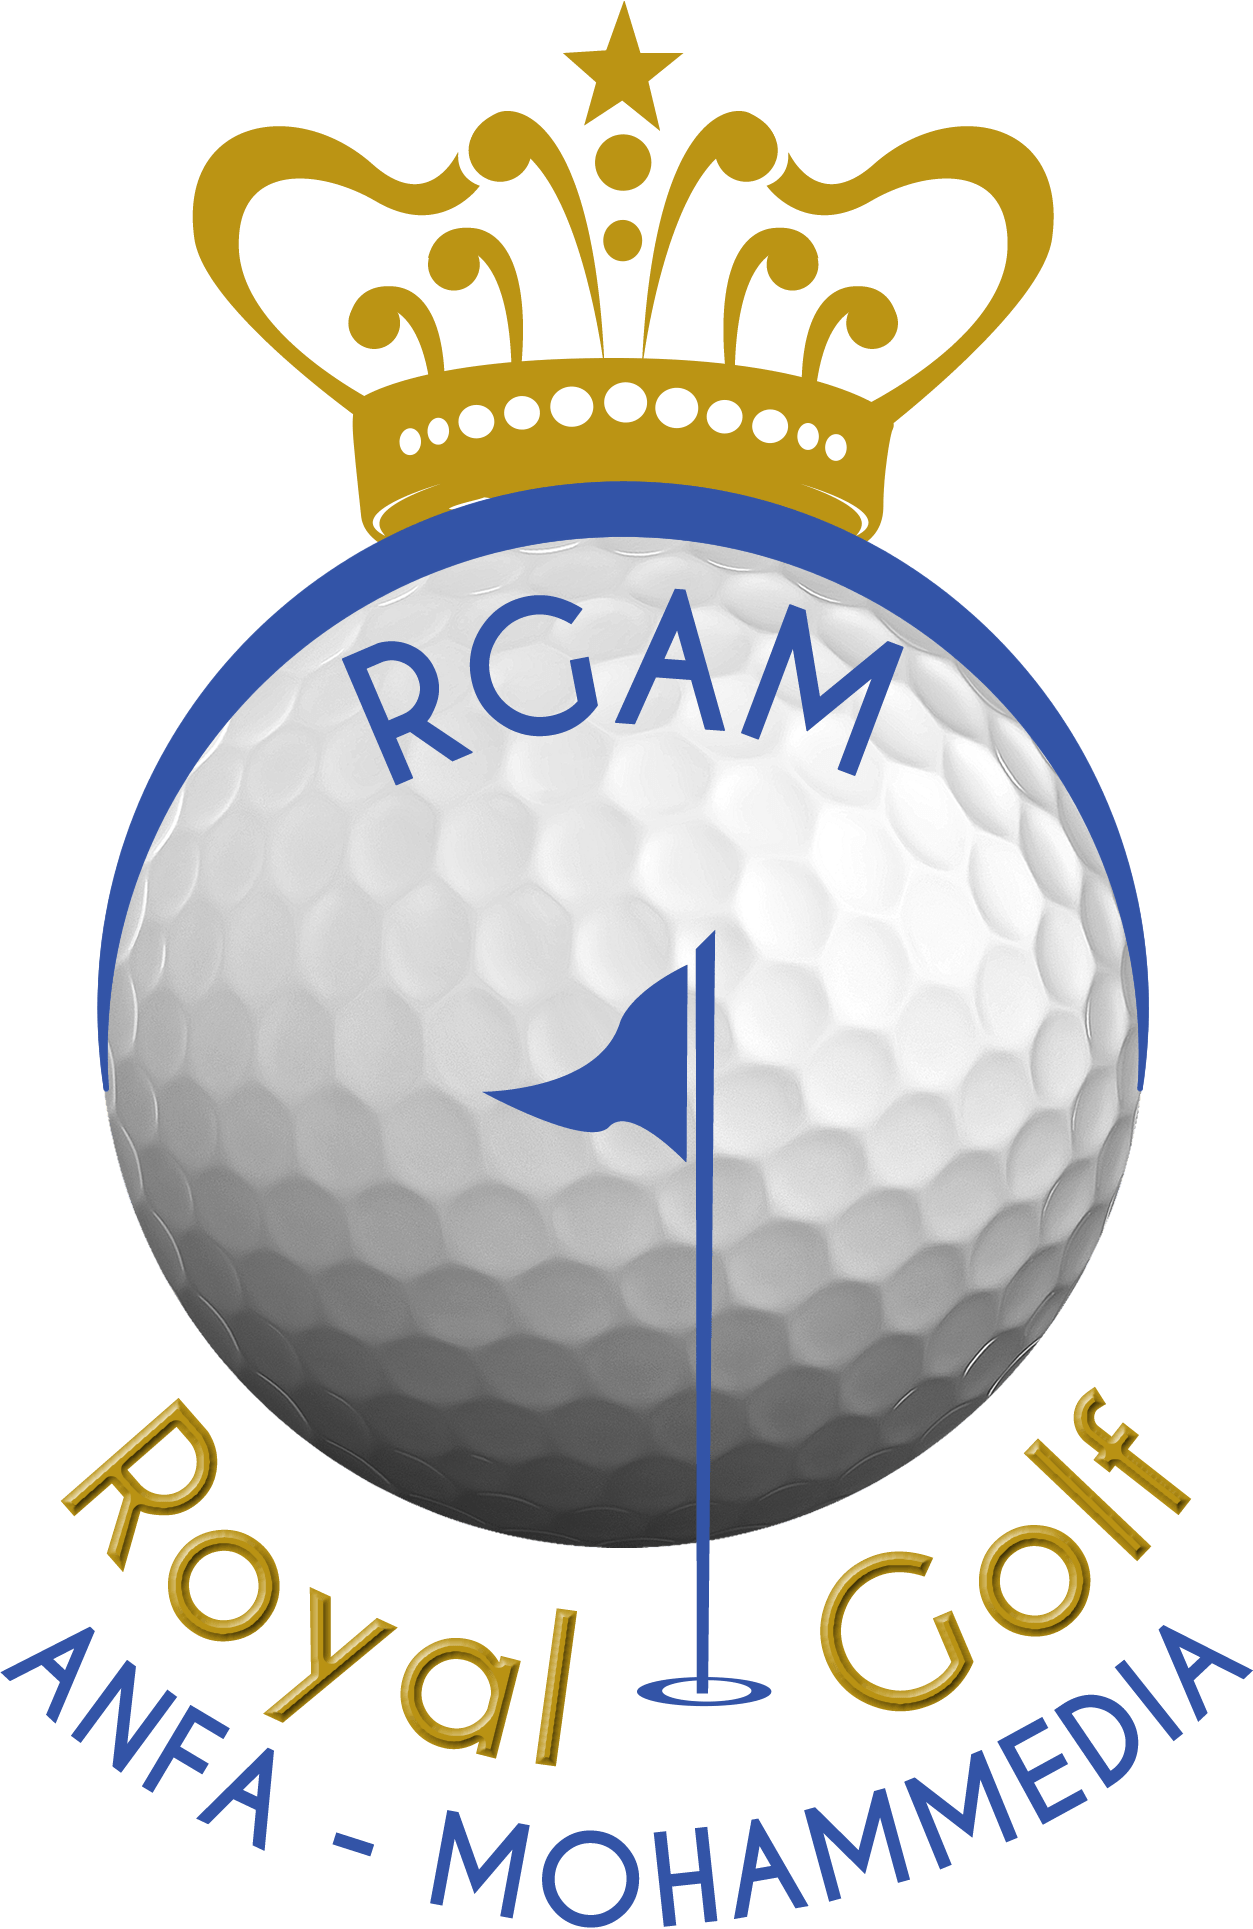 Royal Golf Anfa Mohammedia - Royal Golf Anfa Mohammedia Logo (1253x1929)